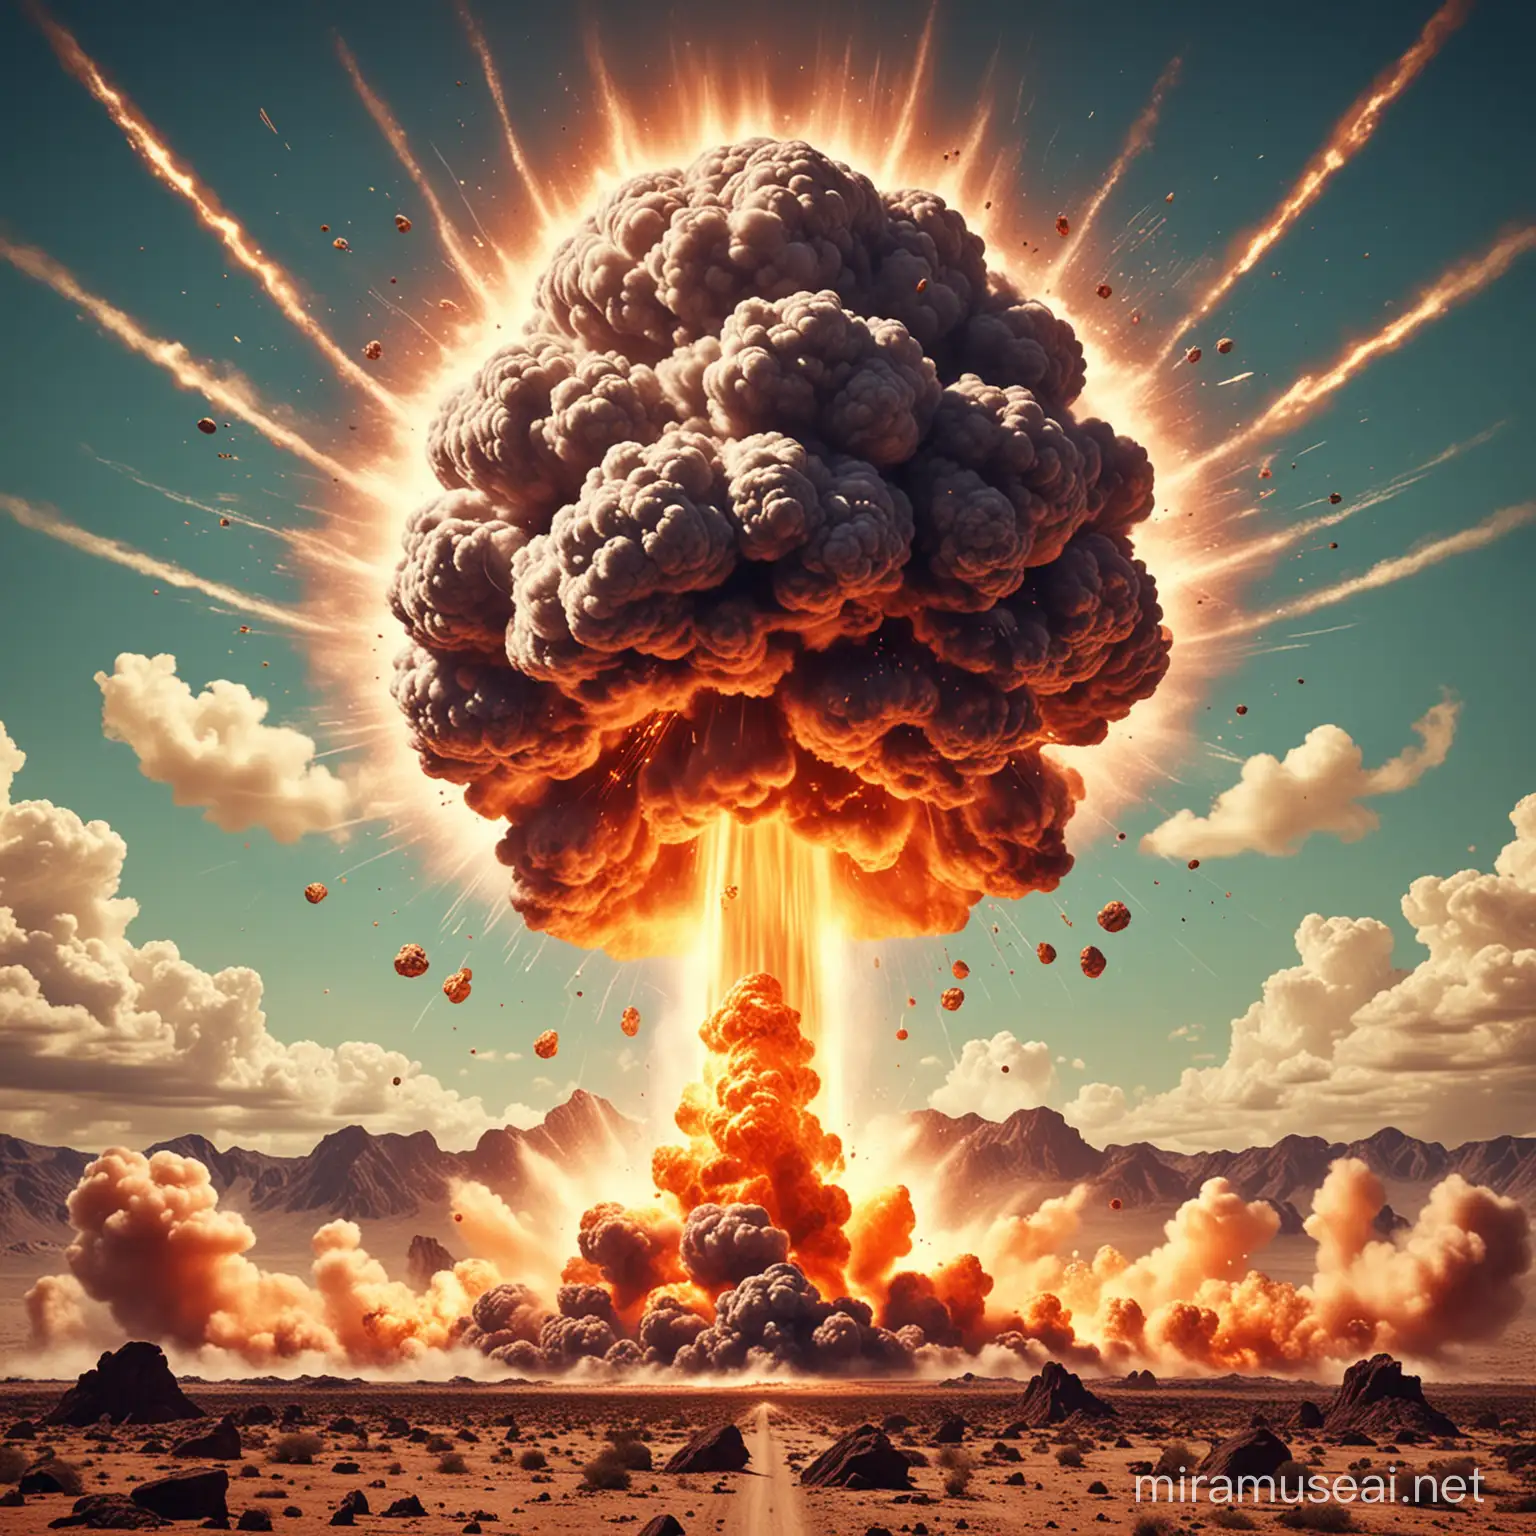 Retro Atomic Bomb Explosion Art Dramatic Vintage Nuclear Blast